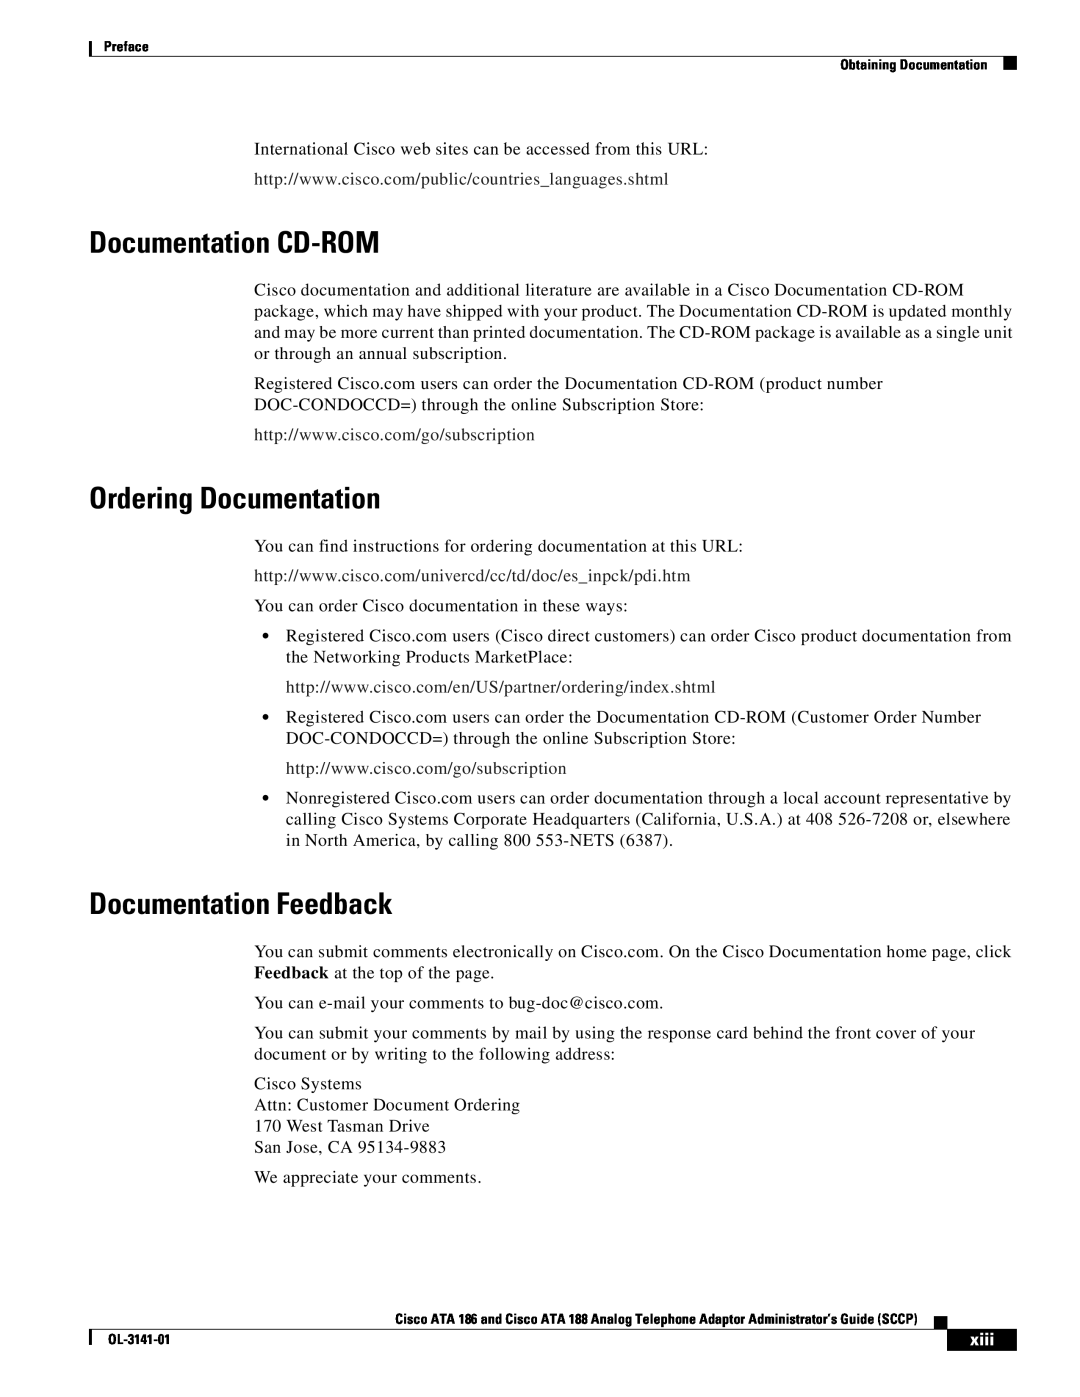 Cisco Systems ATA 188, ATA 186 manual Documentation CD-ROM, Ordering Documentation, Documentation Feedback, xiii 